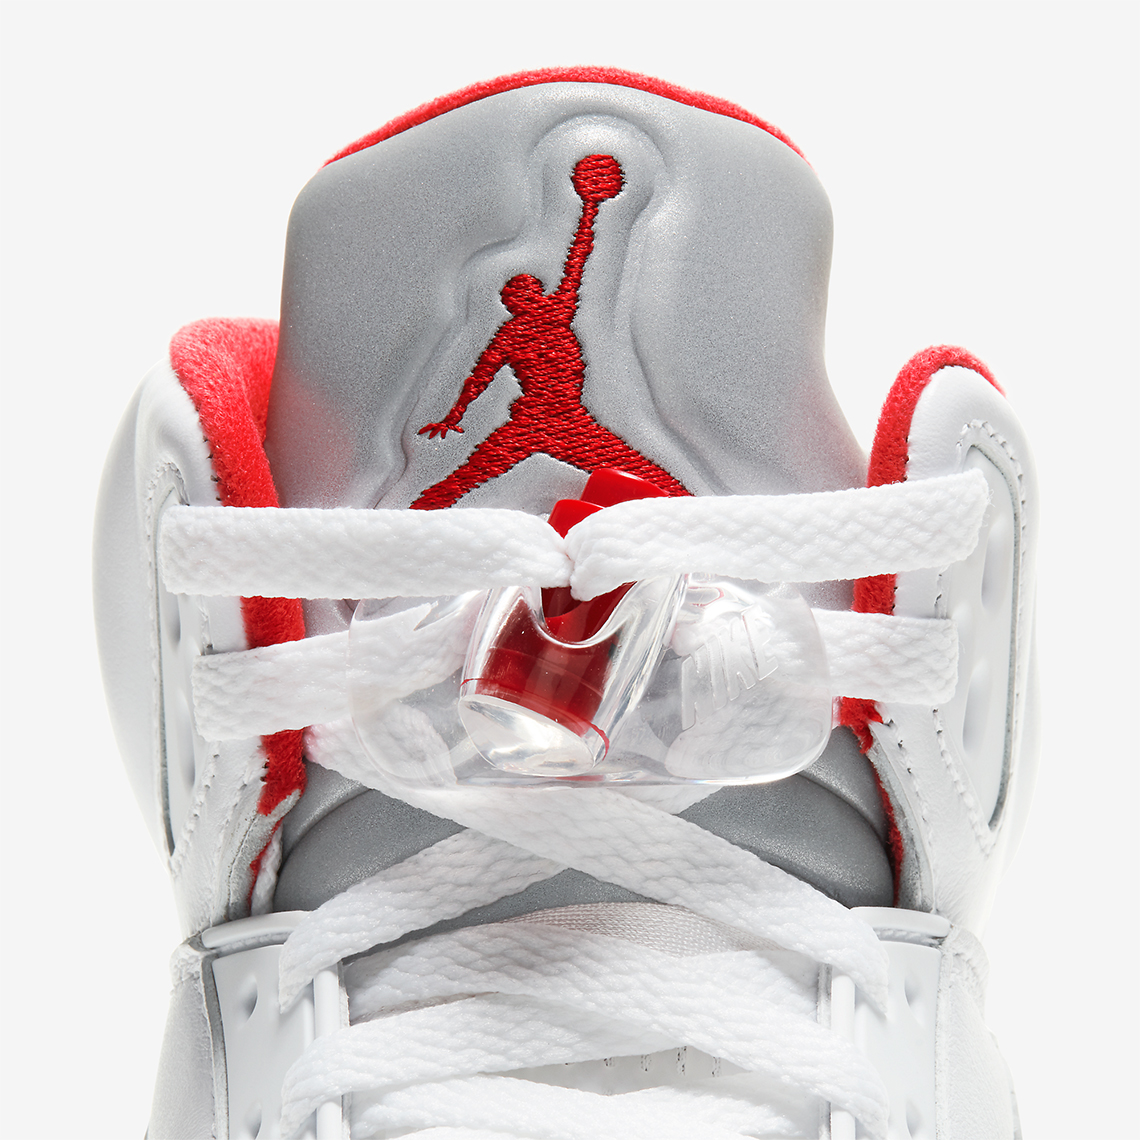 Air Jordan 5 Fire Red 2020 Release Date + Store List